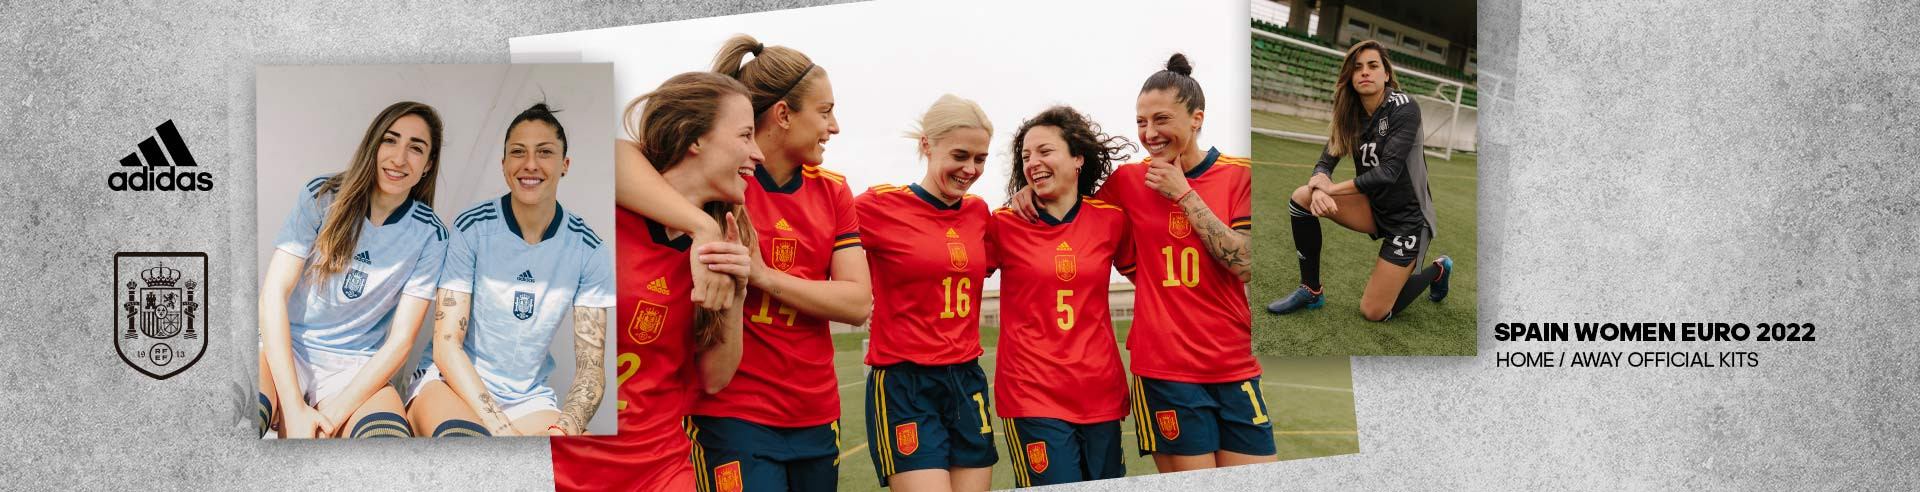 ADIDAS SPAIN WOMEN EURO 2022 OFFICIAL KITS ABRIL 2022